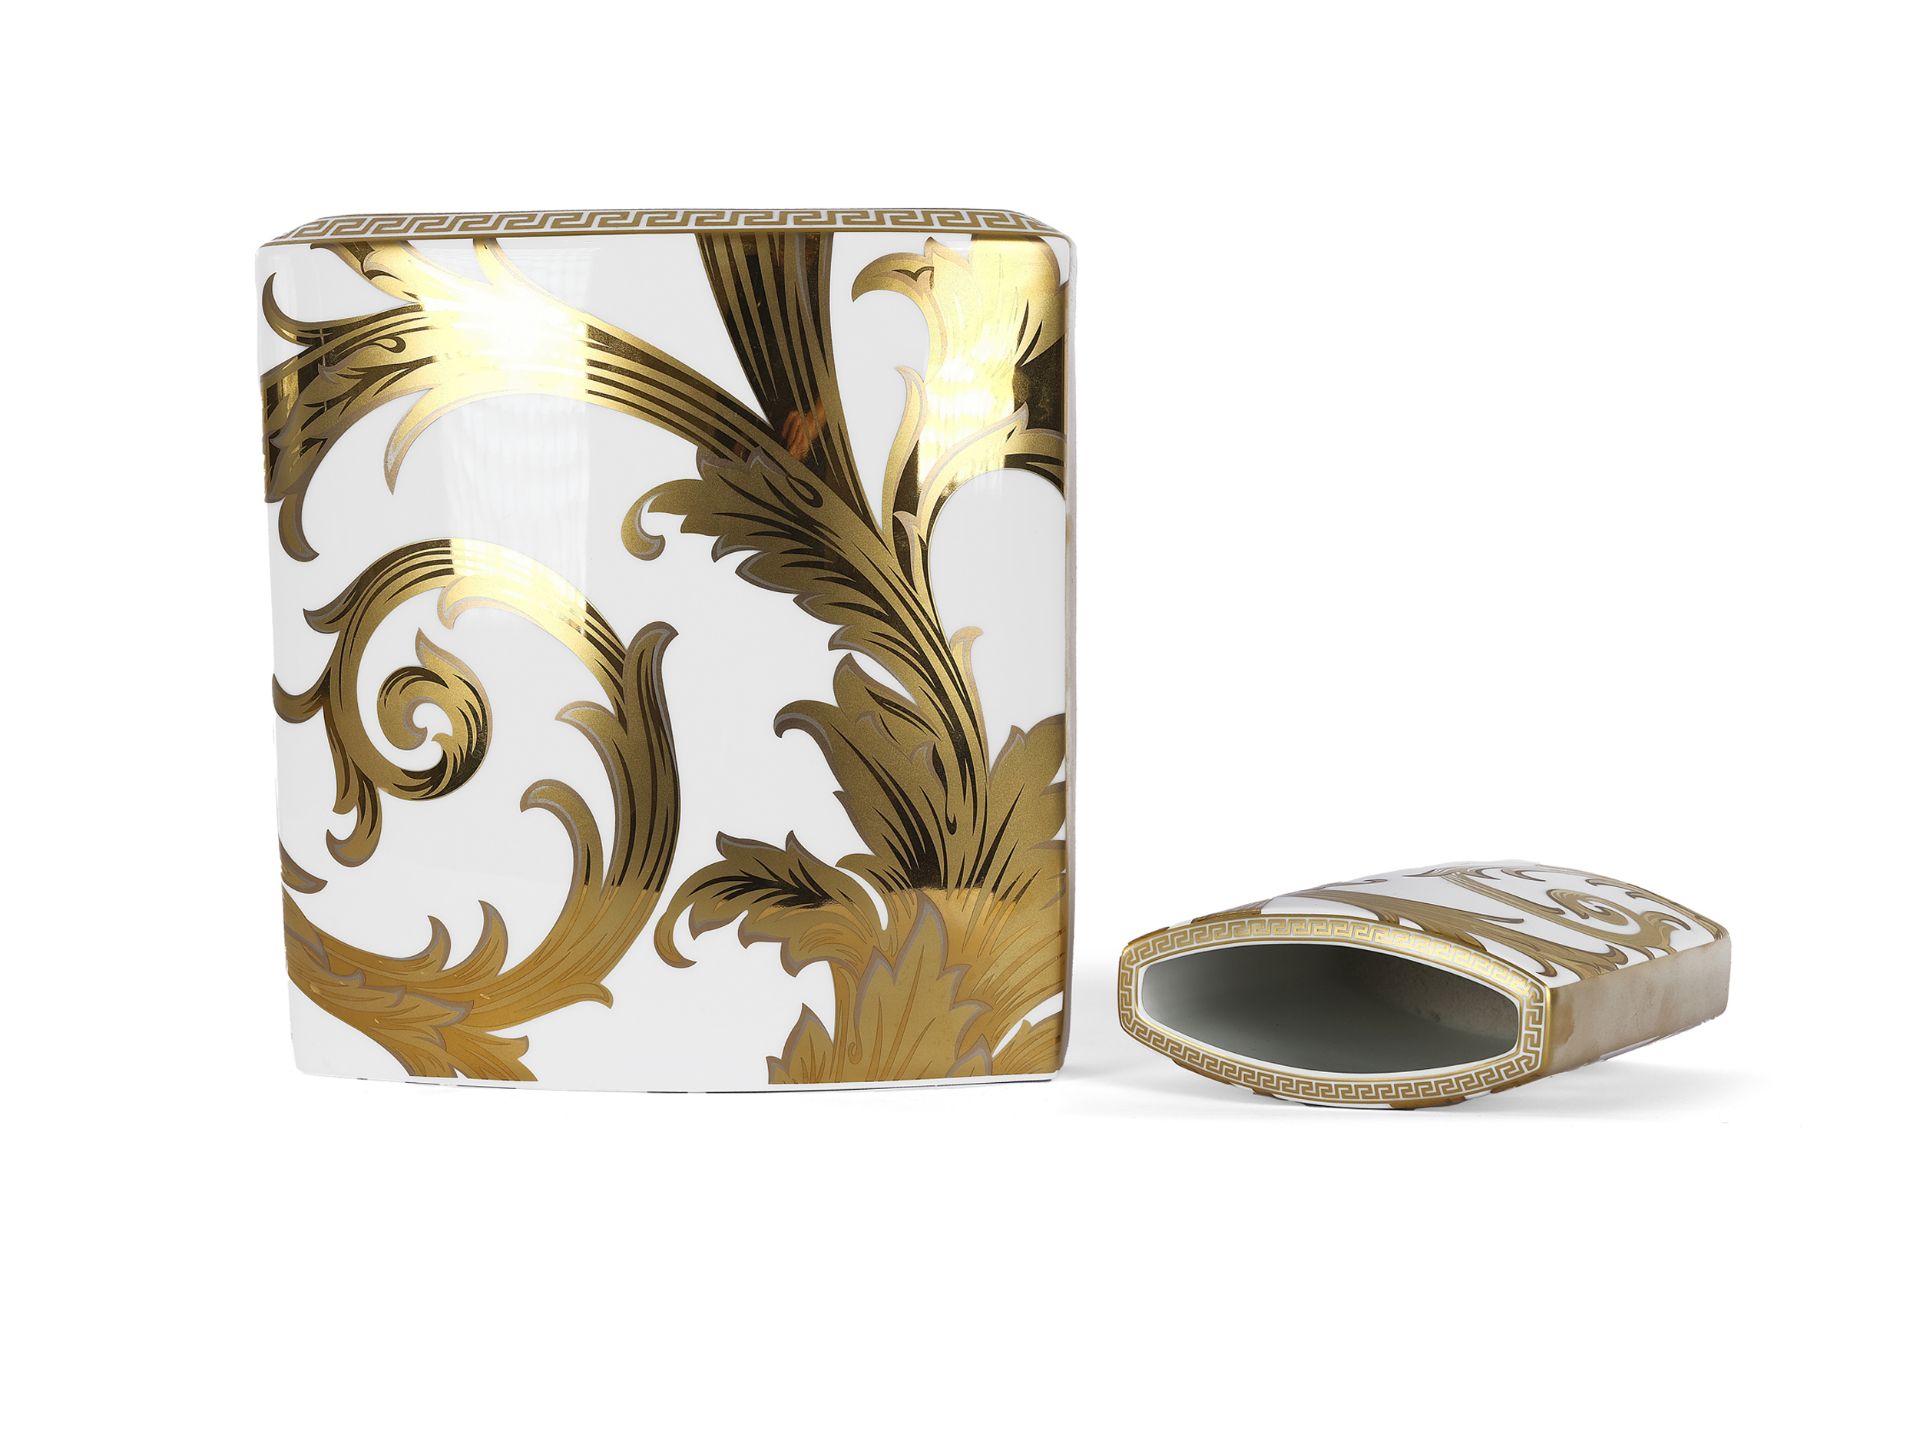 Rosenthal x Versace, "Golden Arabesque", pair of vases - Image 5 of 6